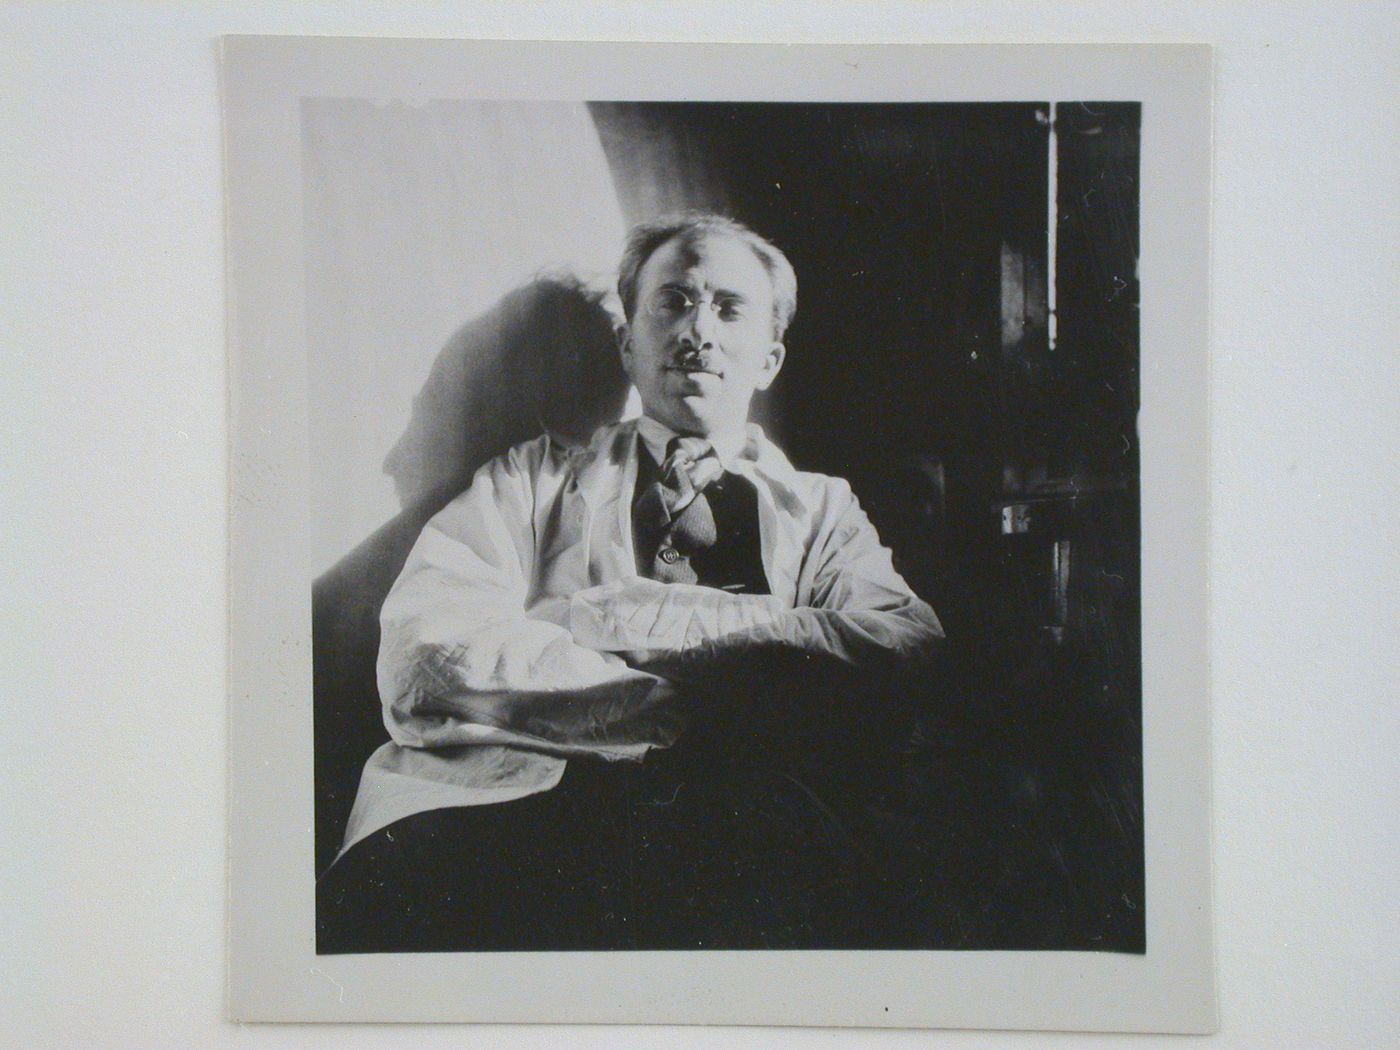 Portrait of André Bloc, editor of L'Architecture d'aujourd'hui, in a train car